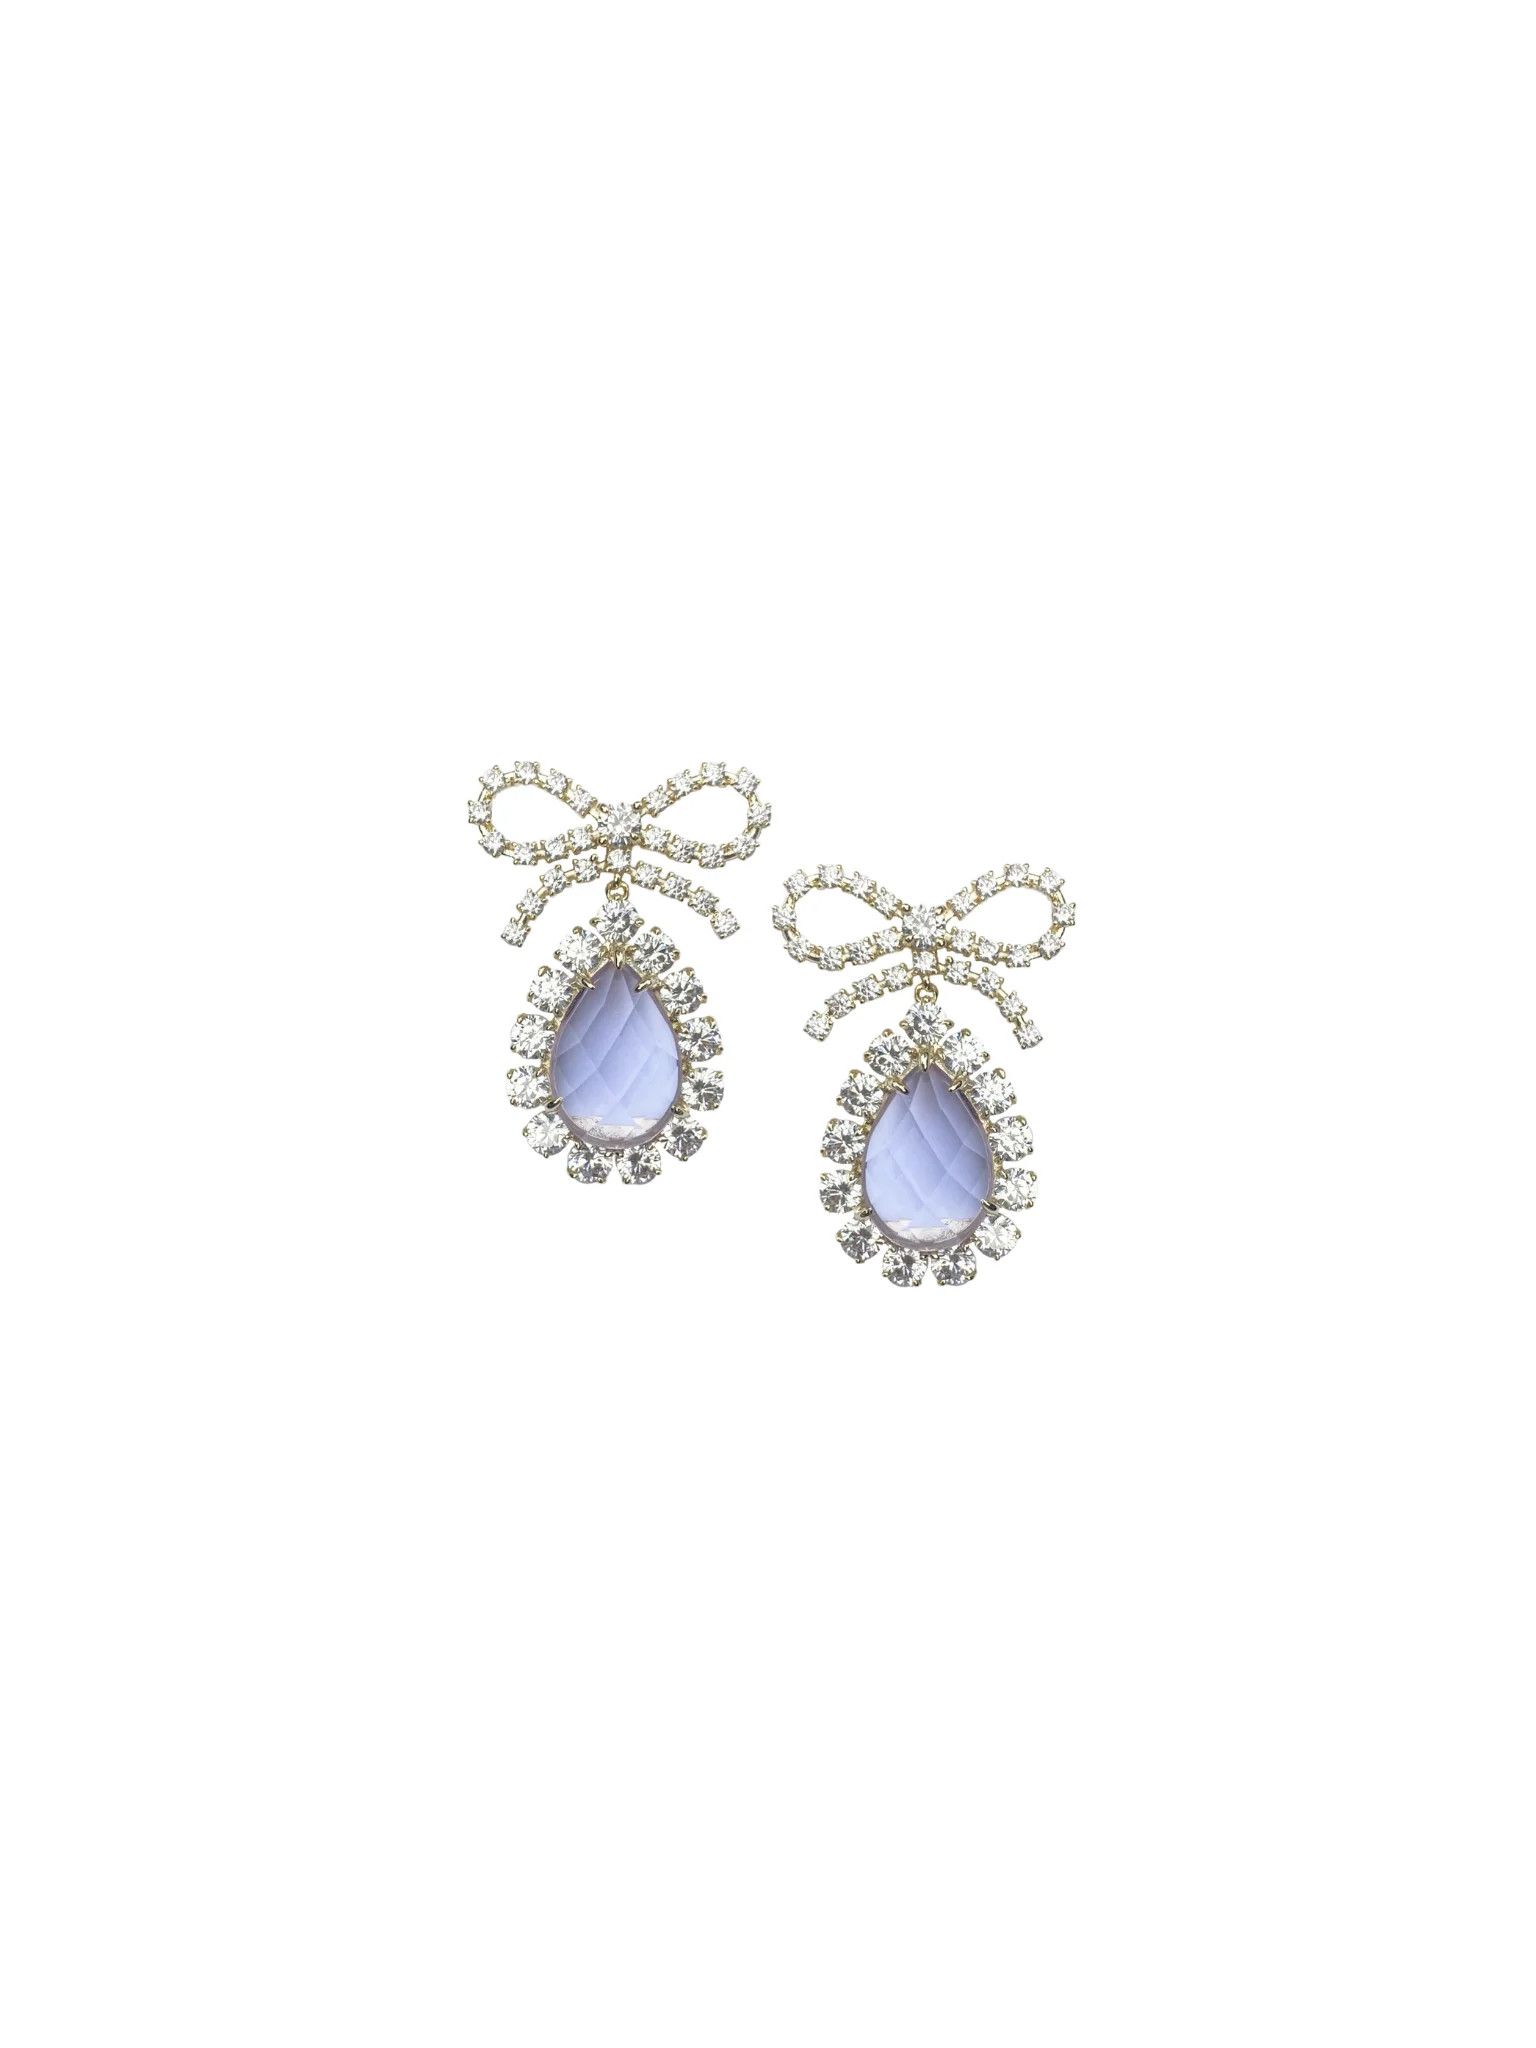 Embellished Bow and Lilac Teardrop | Nicola Bathie Jewelry